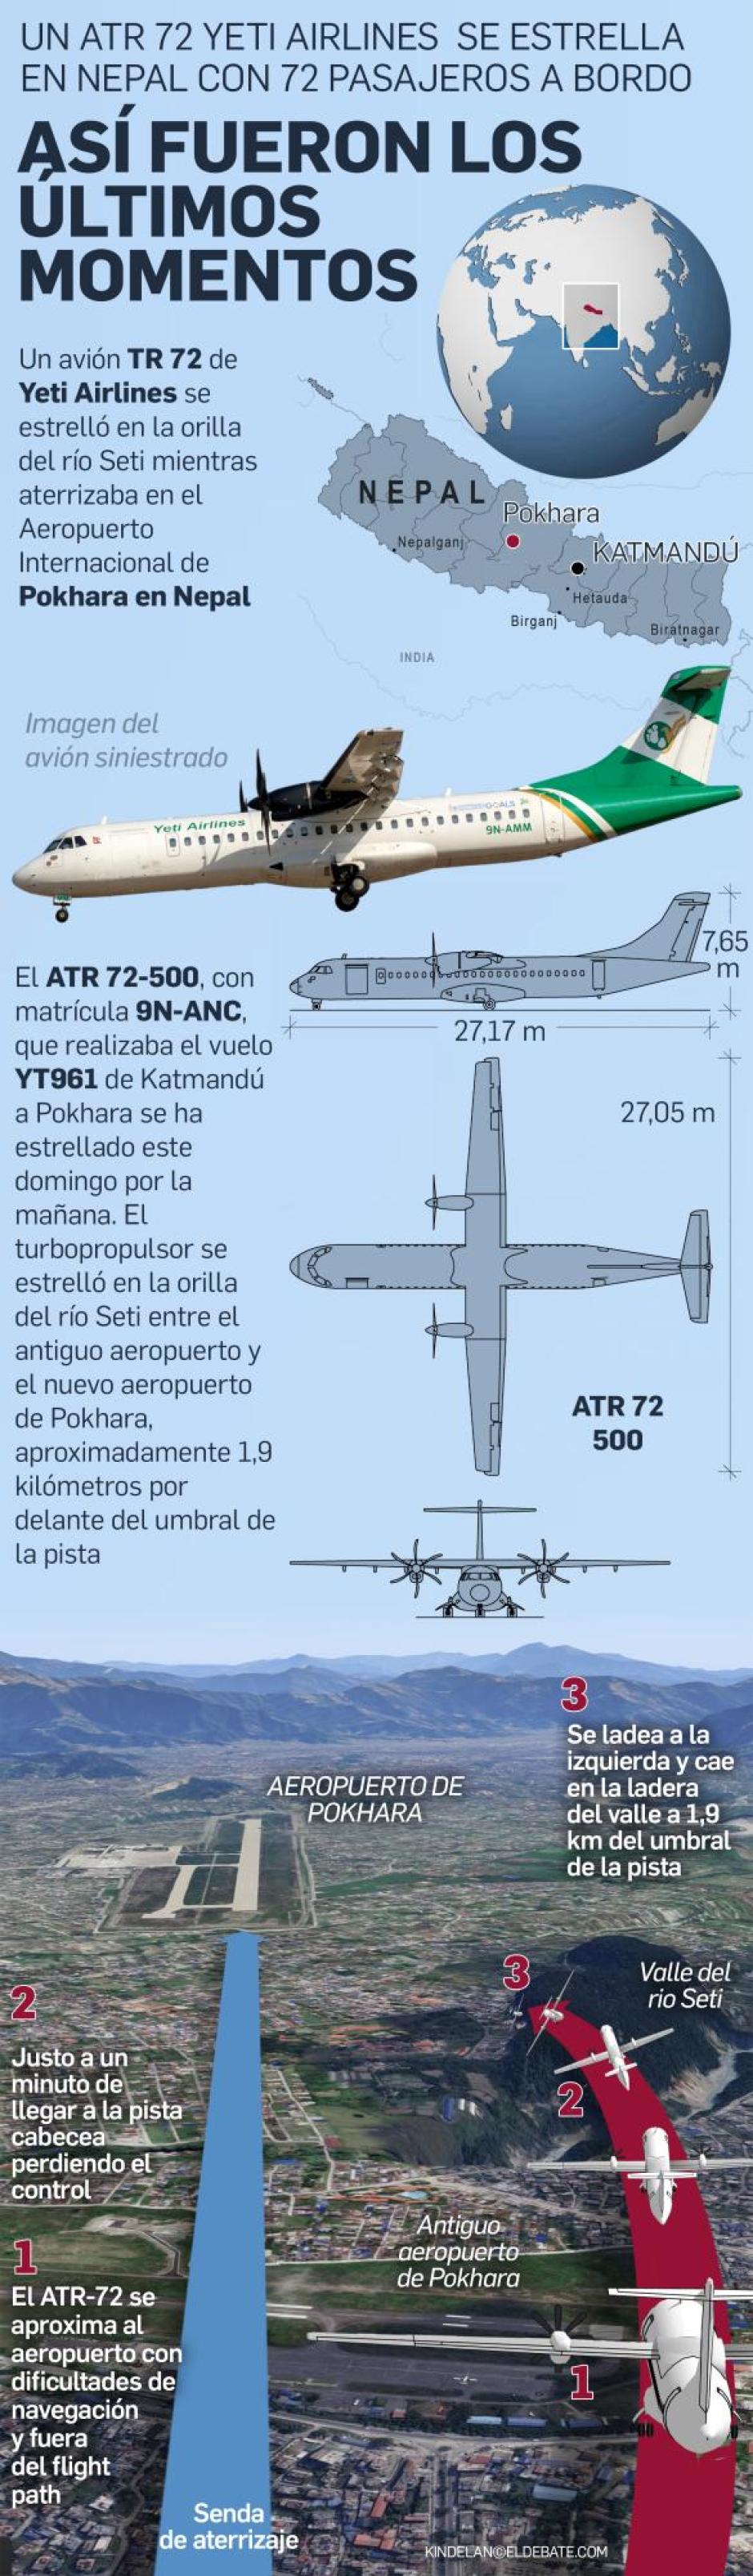 Infografía accidente de avión en Nepal